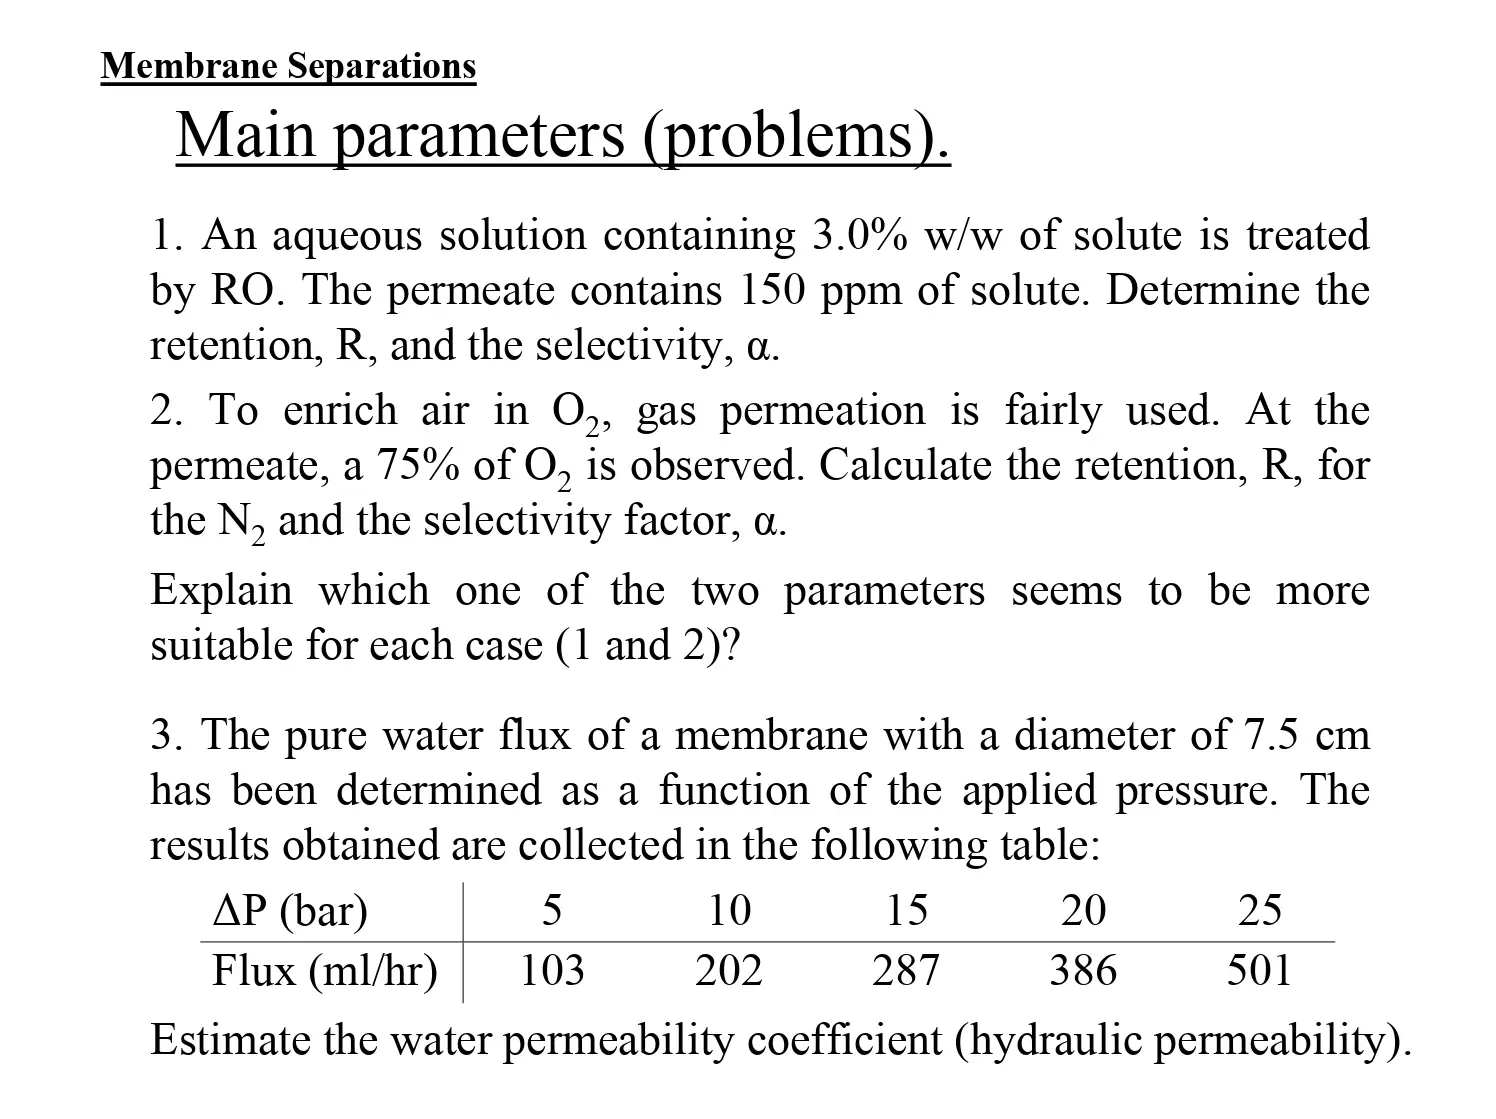 Membrane Separations: Main Parameters (Problems)